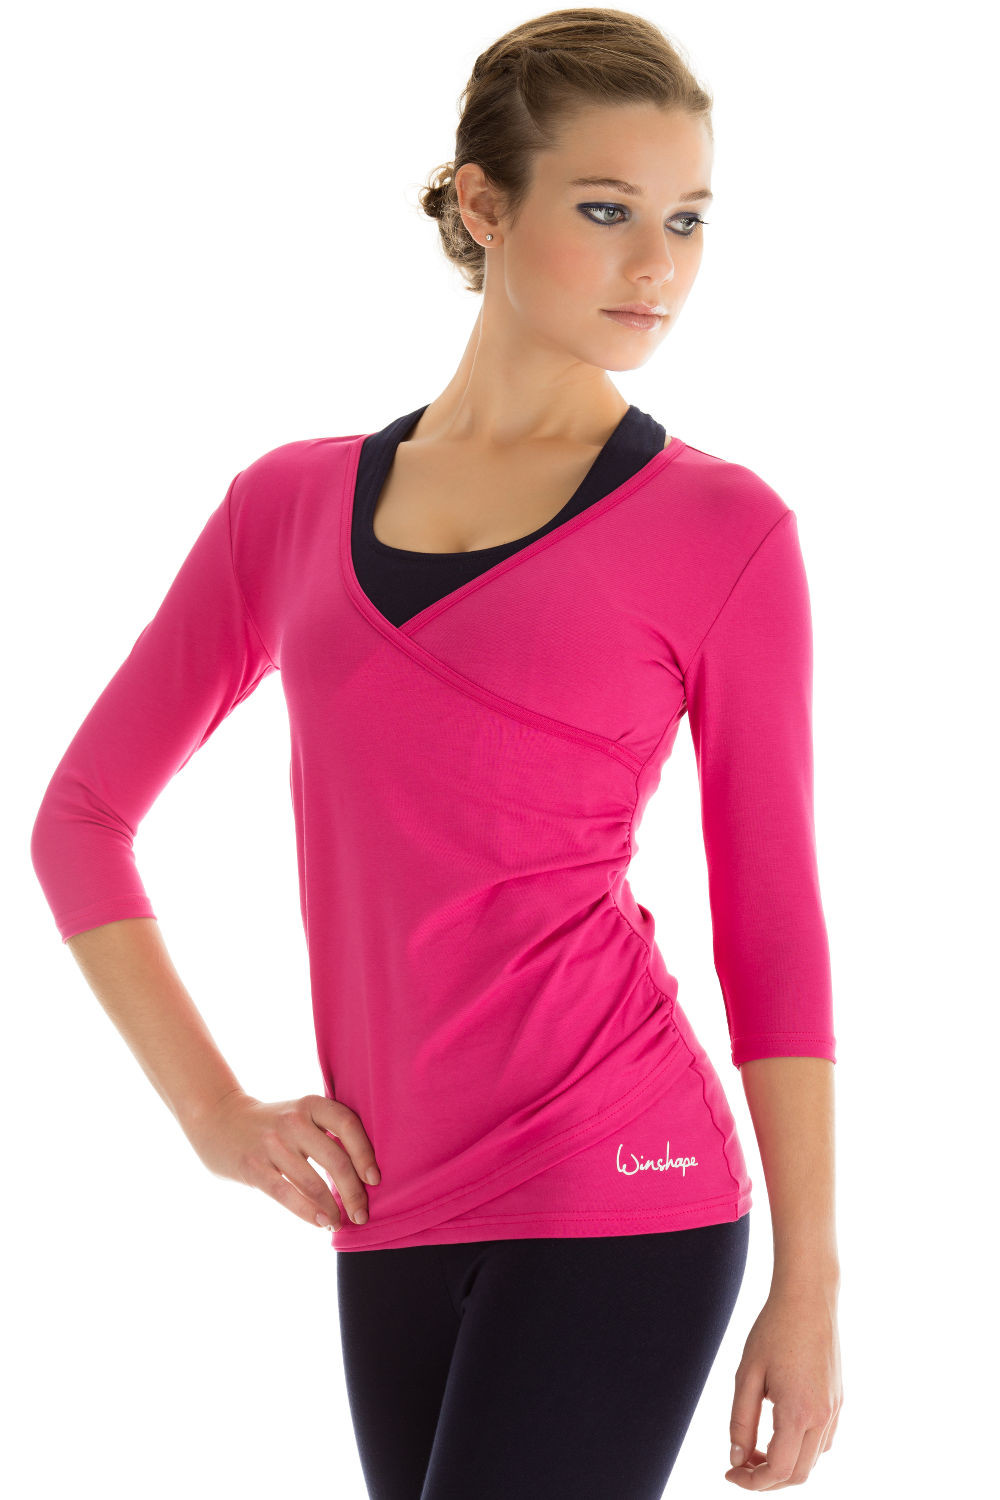 ¾-Arm Shirt in Wickeloptik WS3, Winshape Flow Style pink